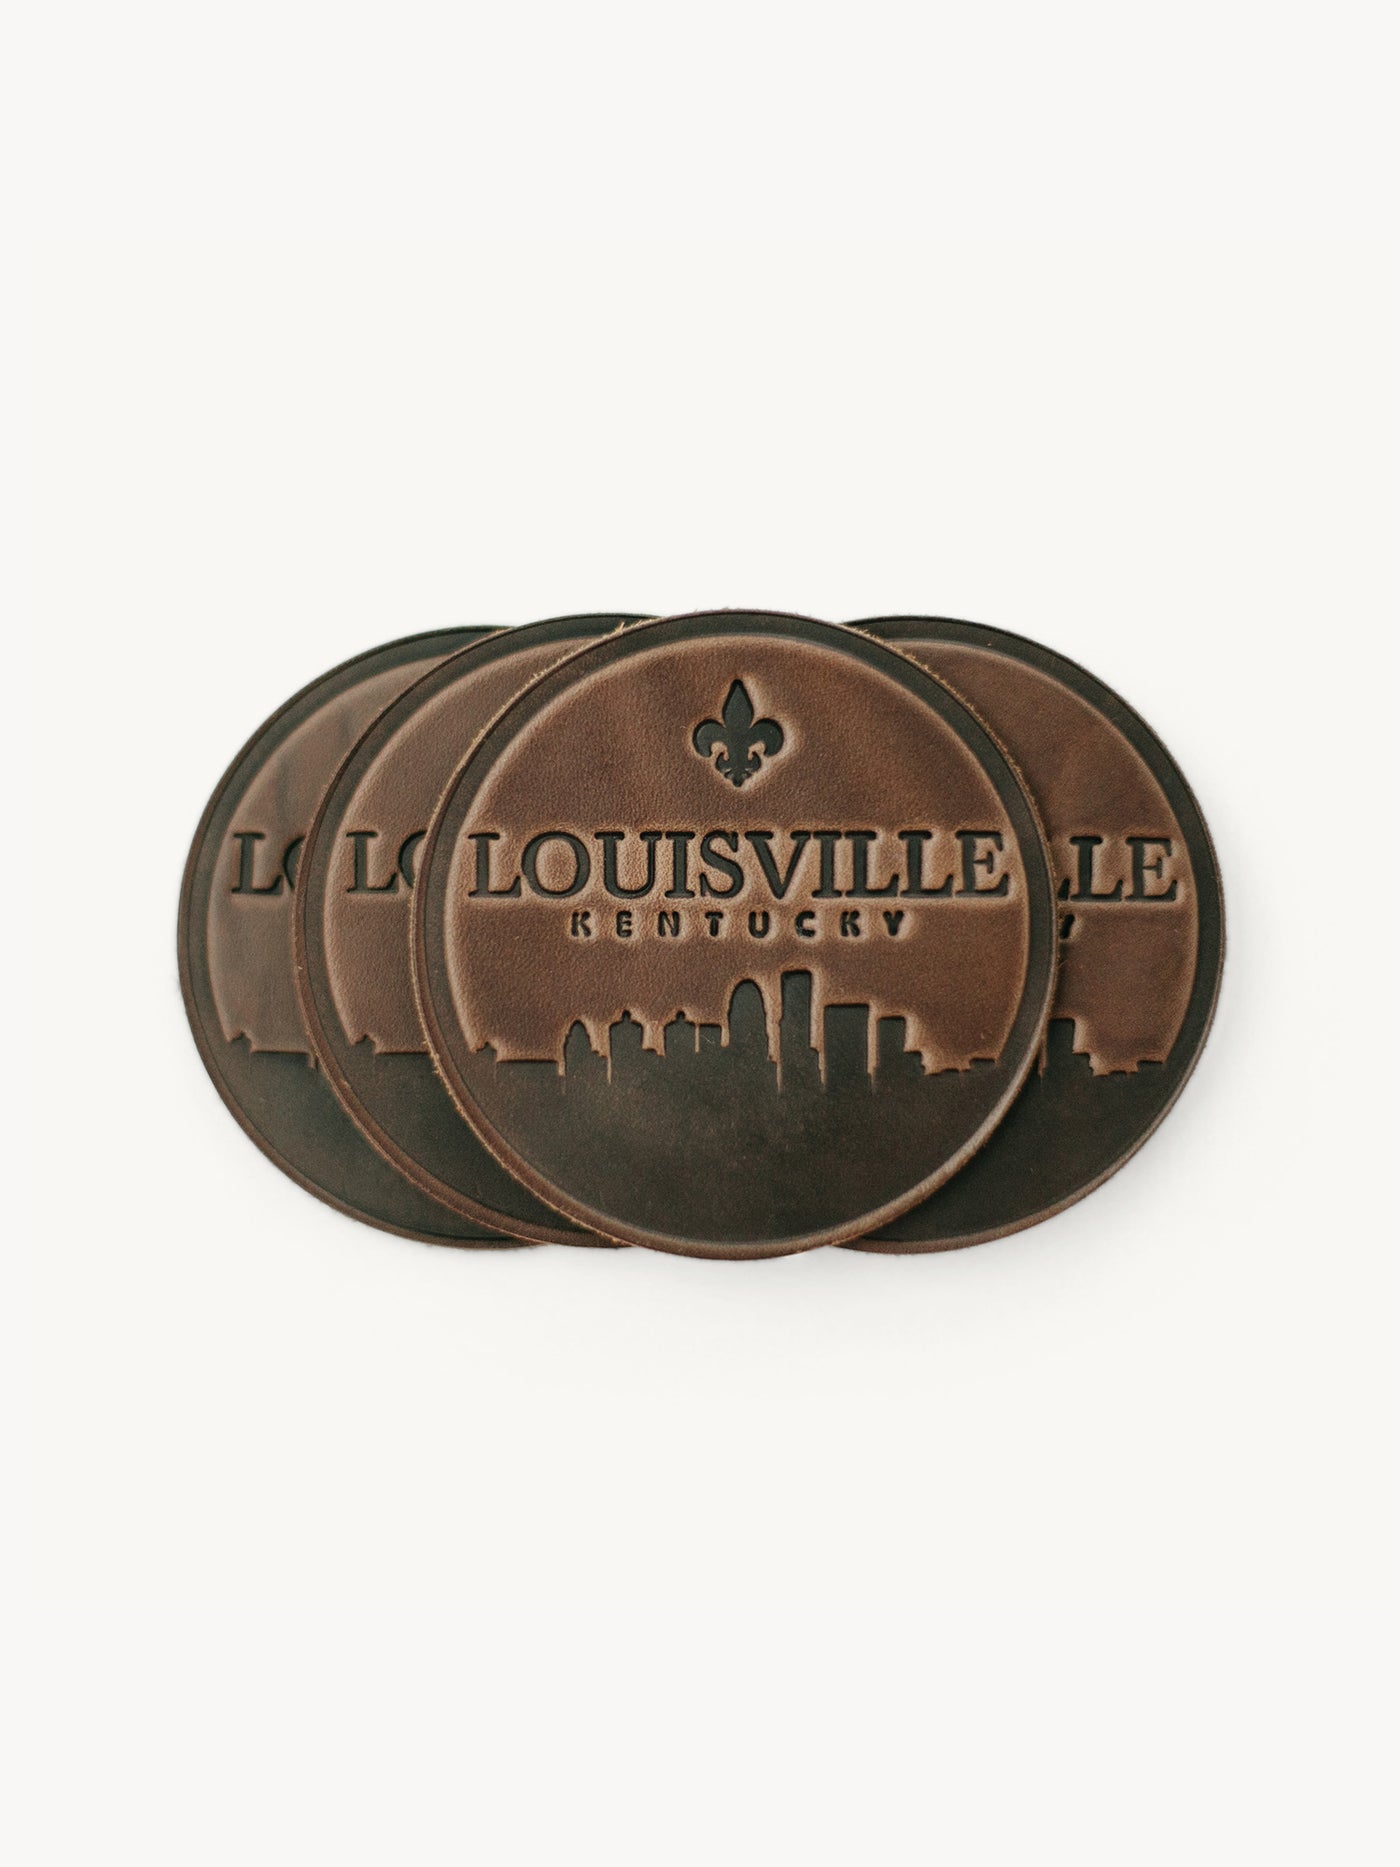 Louisville Skyline Coasters